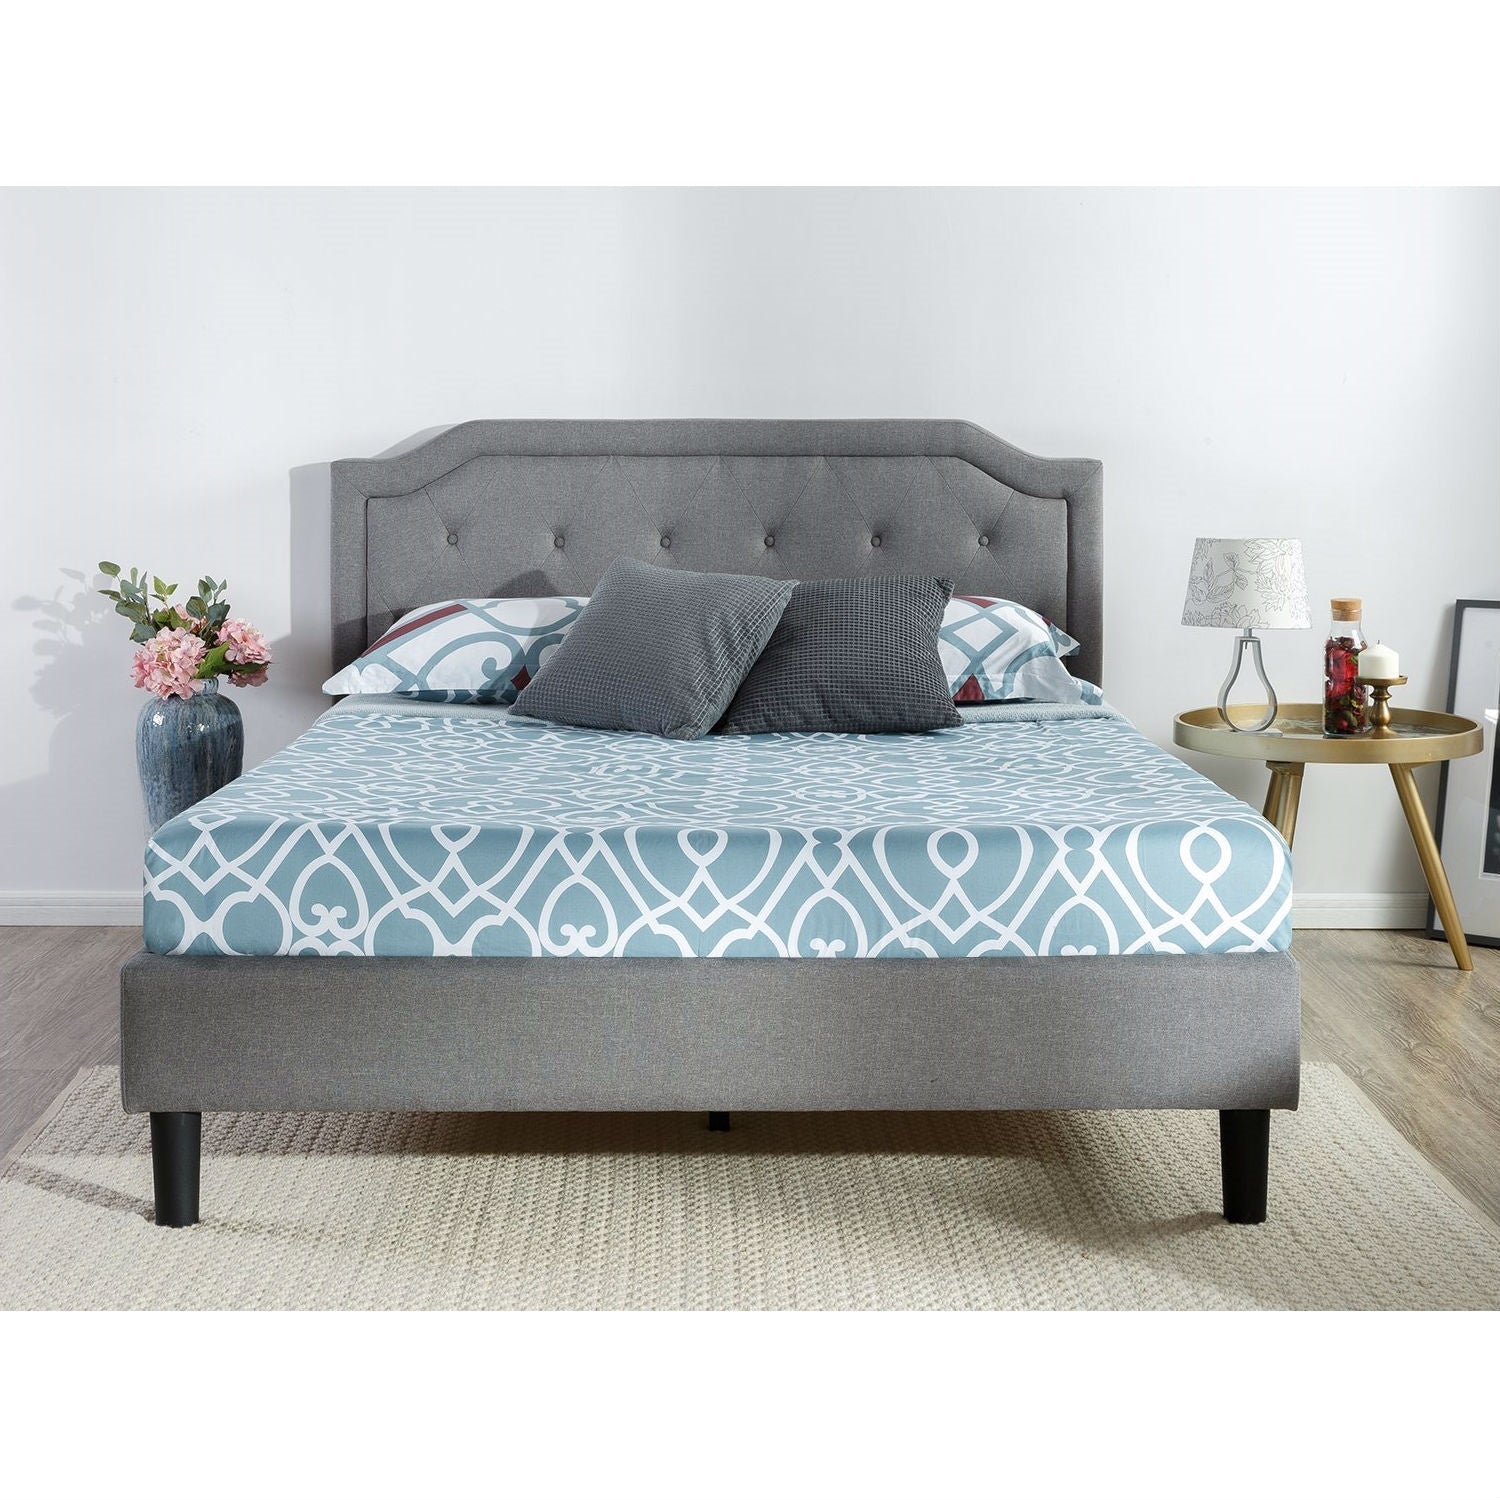 Bedroom > Bed Frames > Platform Beds - King Size Grey Upholstered Platform Bed With Classic Button Tufted Headboard